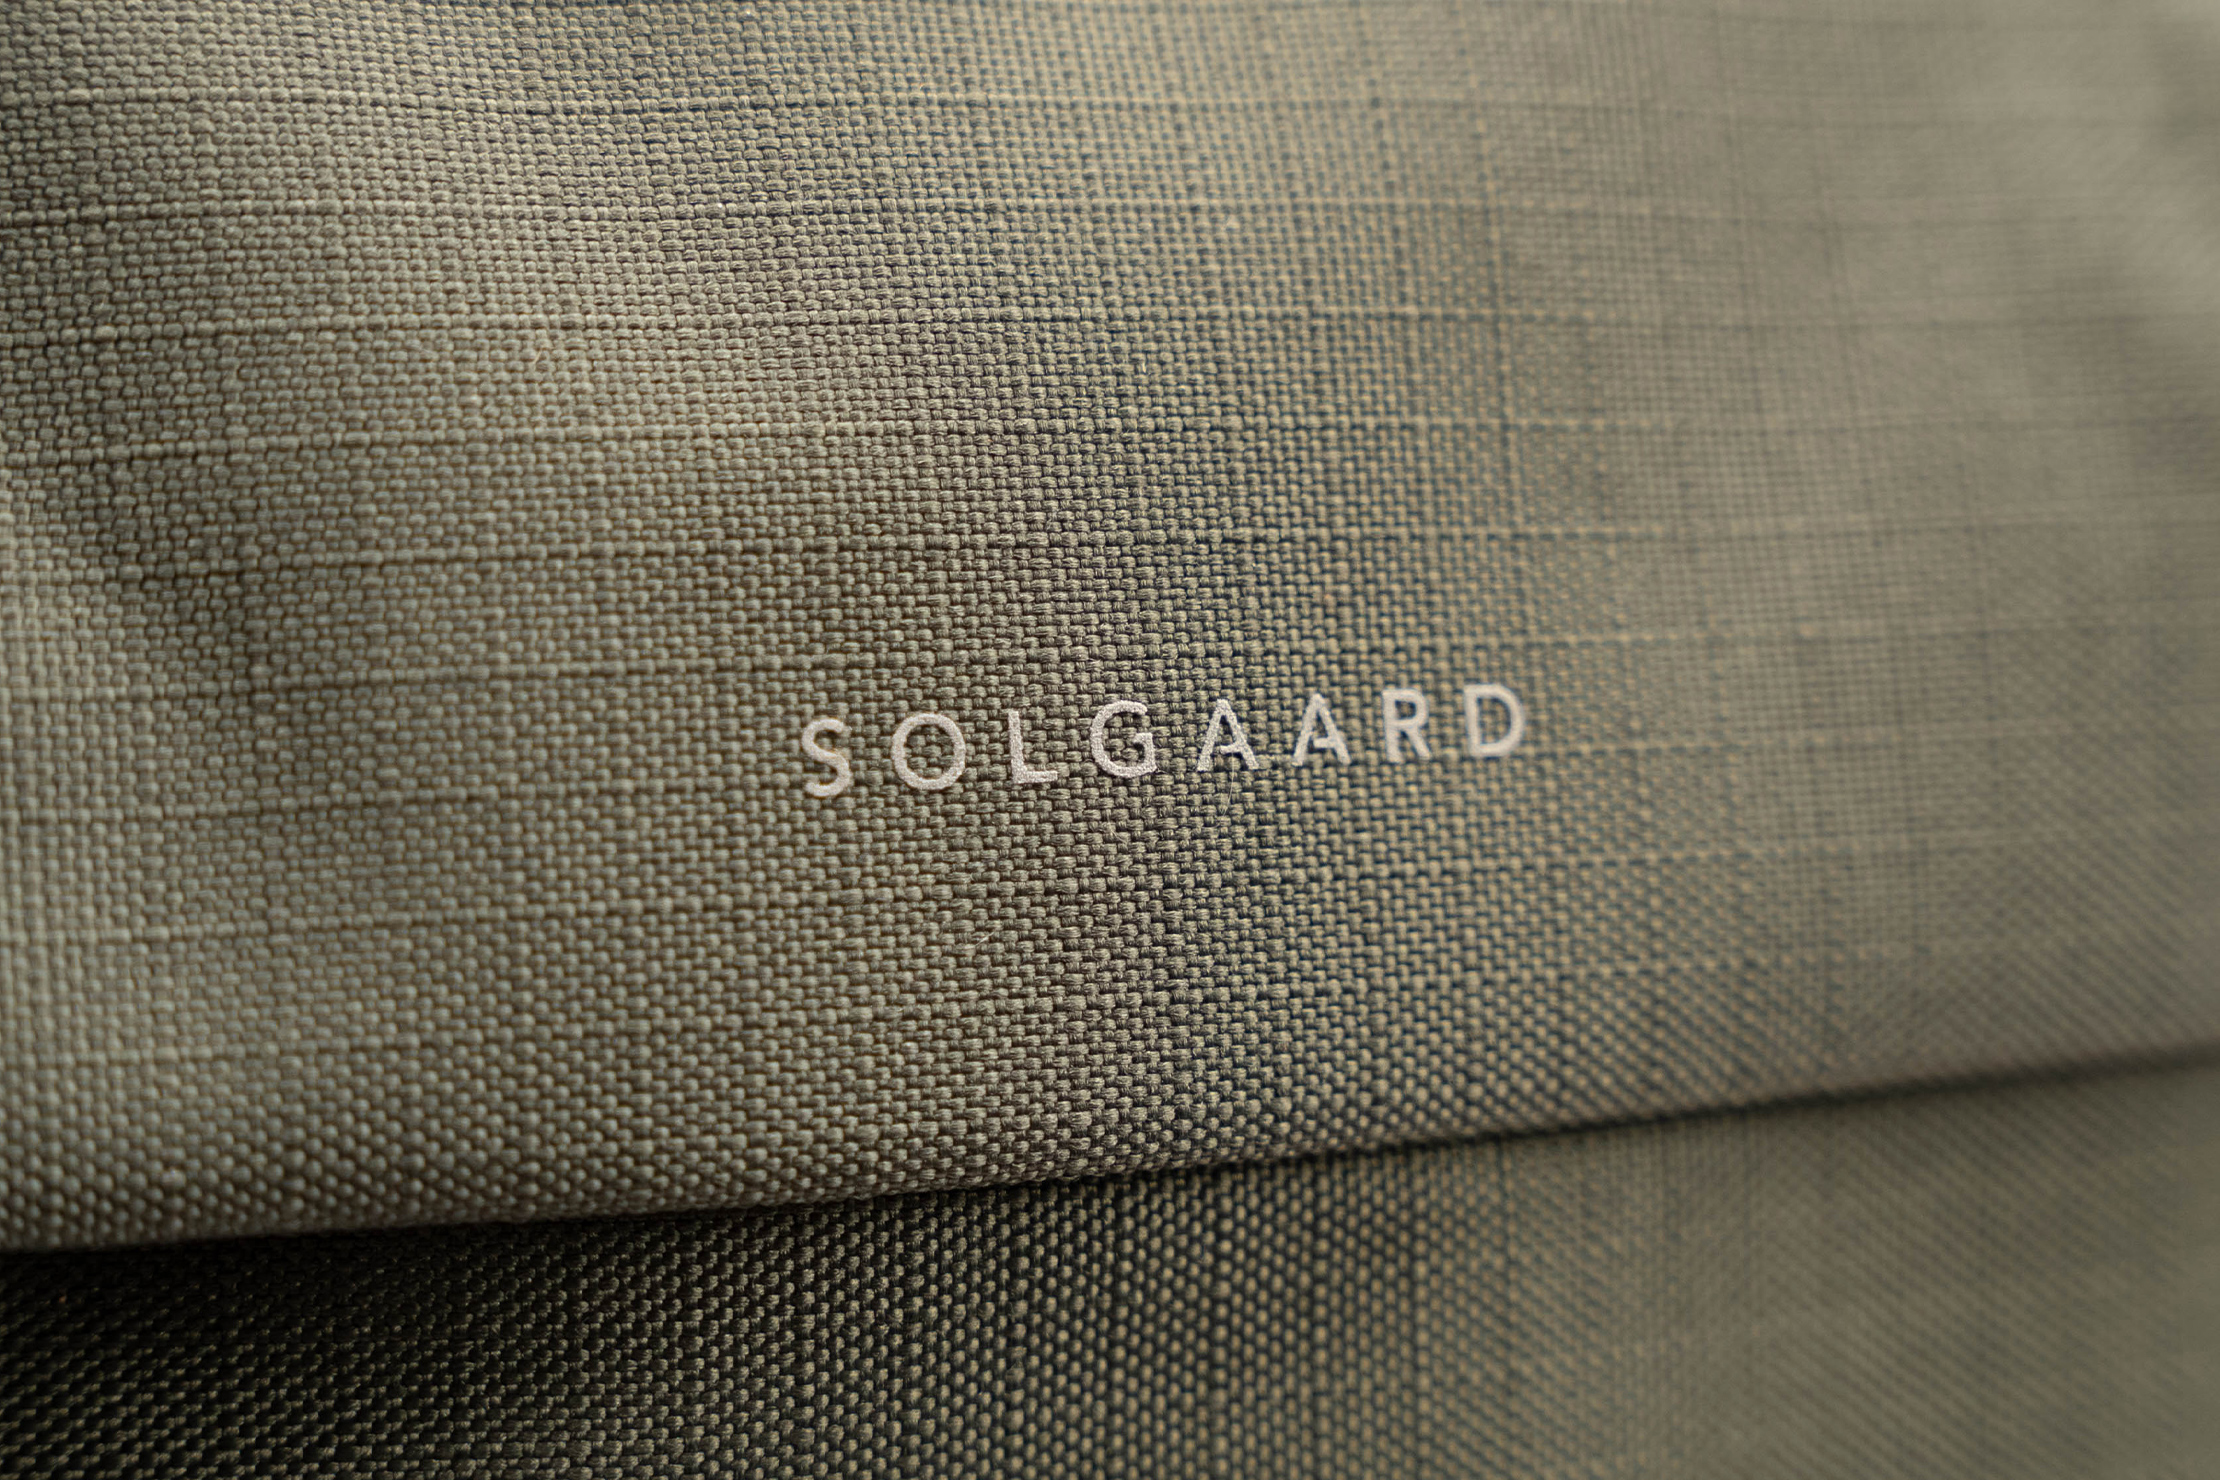 Solgaard Lifepack Endeavor (with closet) Brand